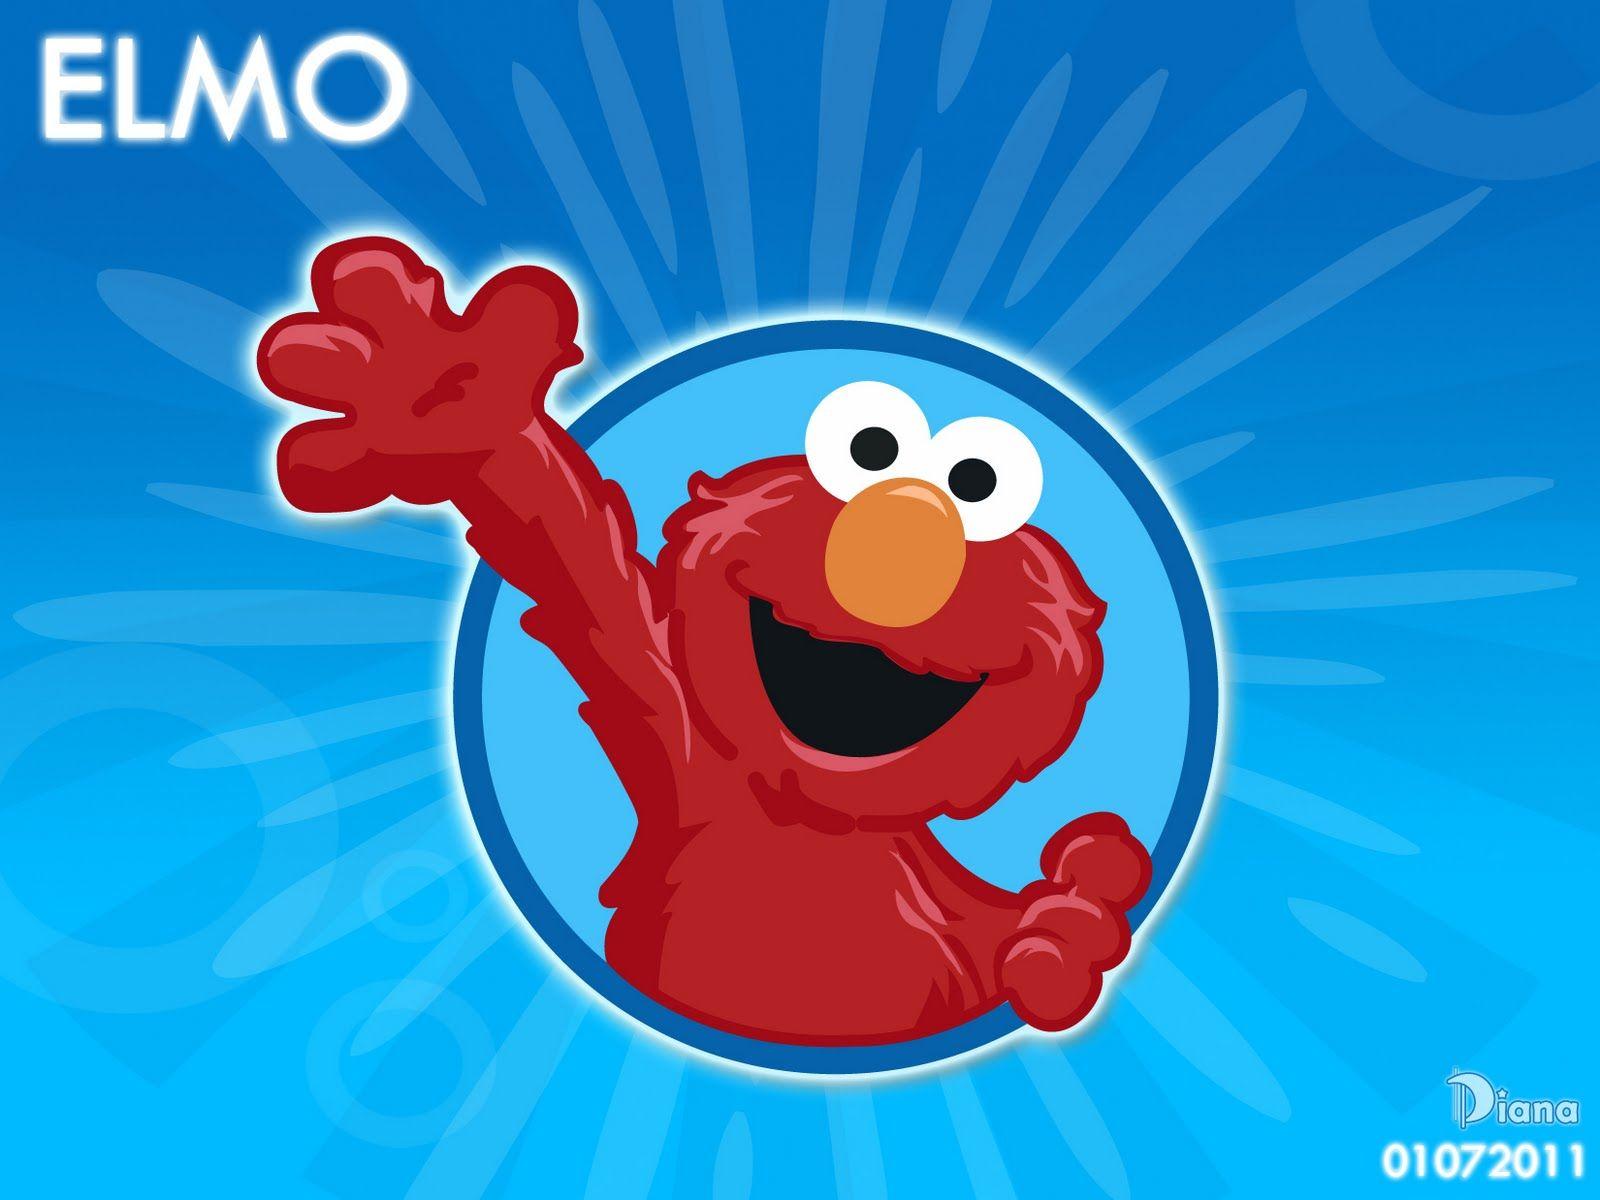 Elmo Wallpaper. Free Download Wallpaper